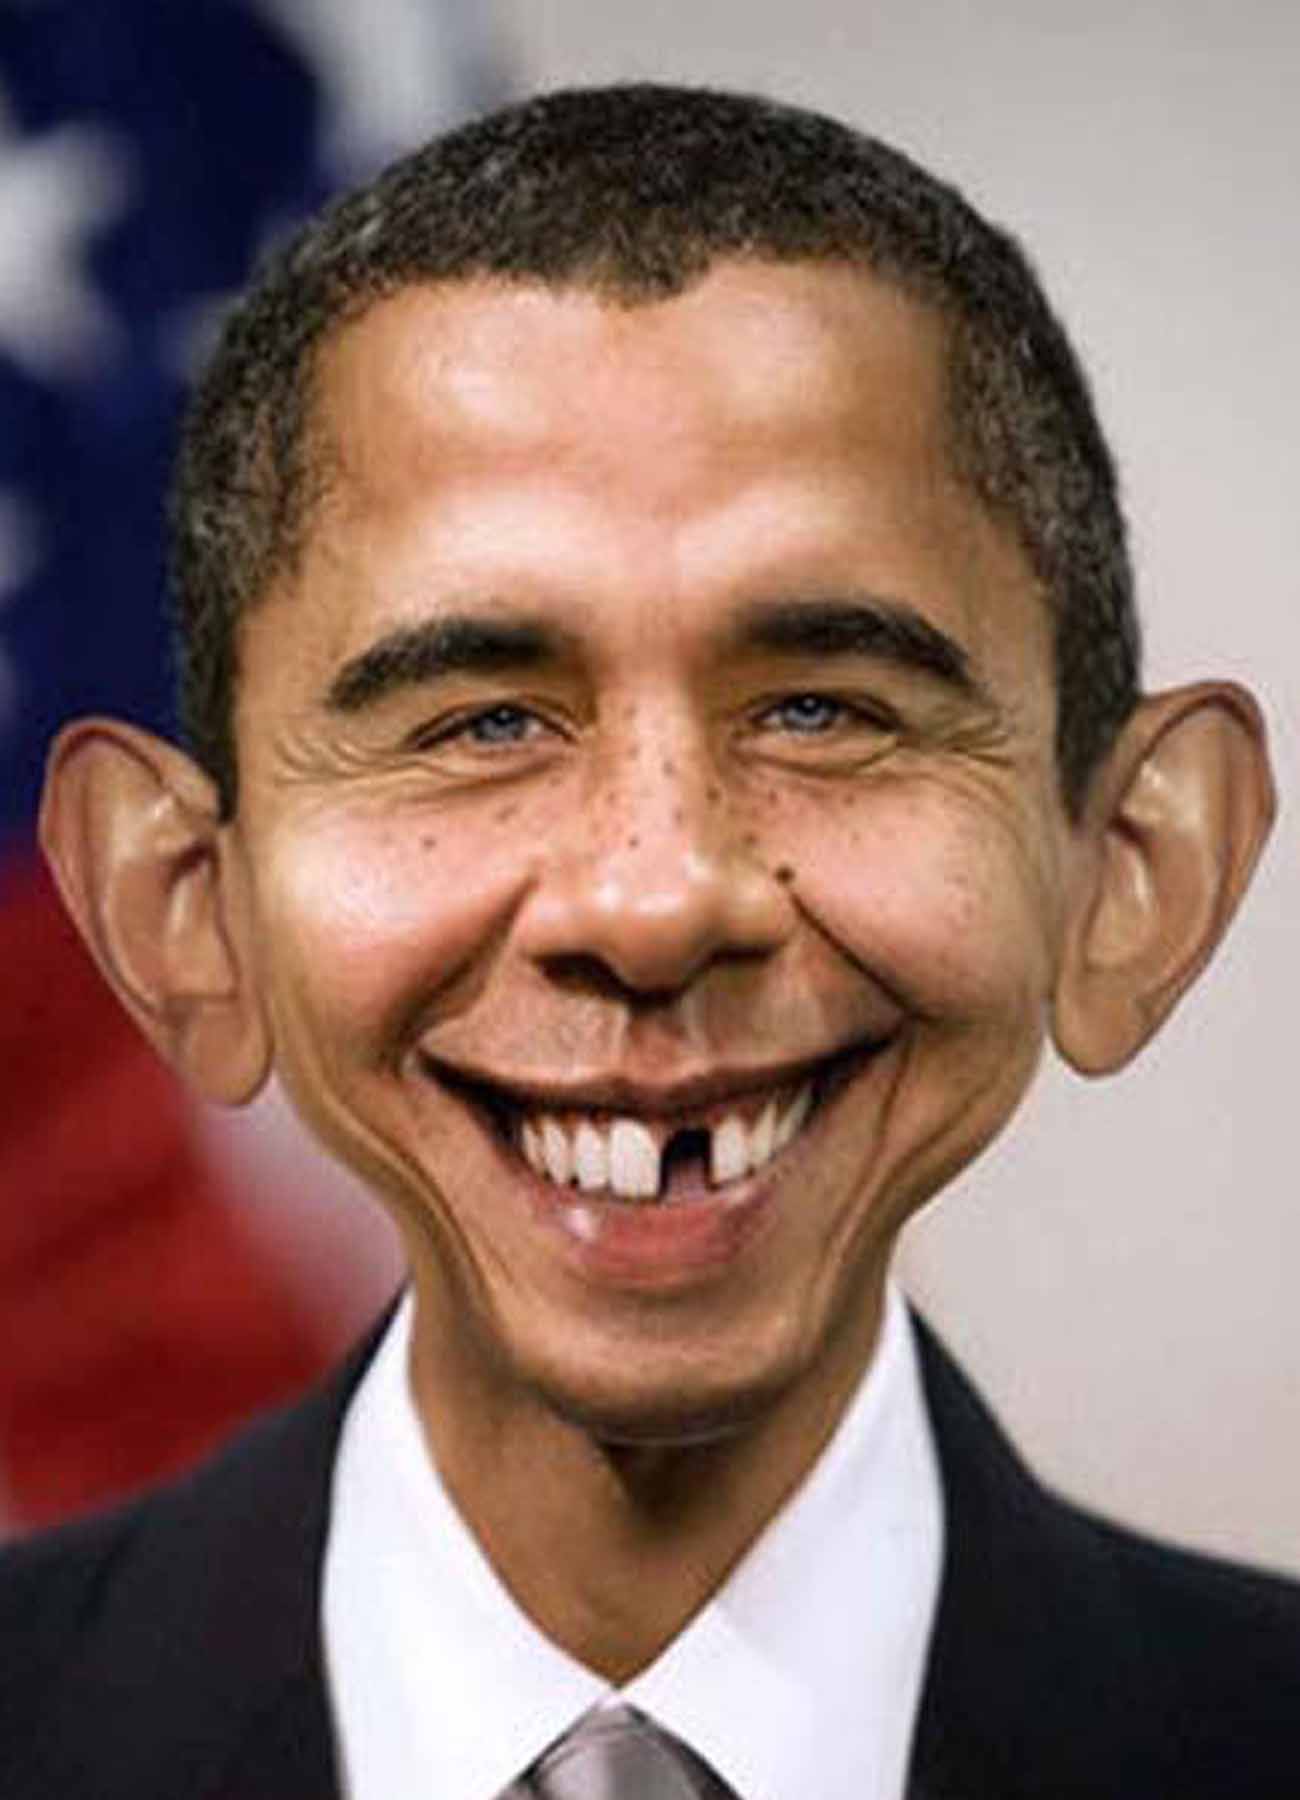 funny obama clip art - photo #41